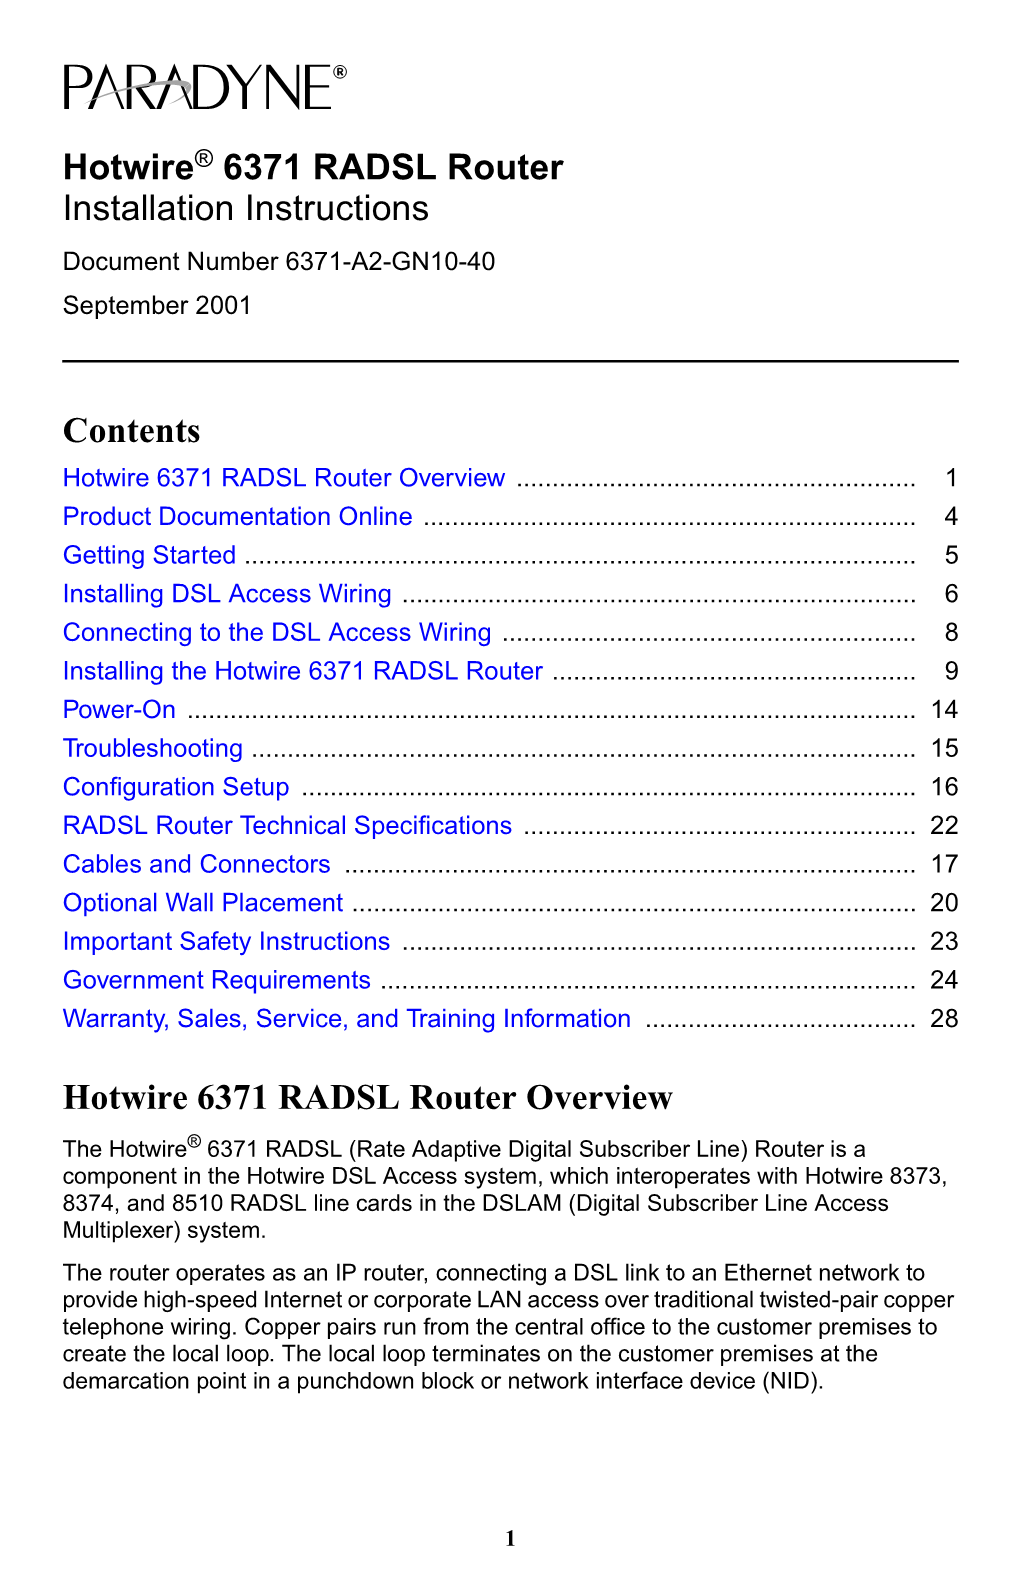 Hotwire 6371 RADSL Router Installation Instructions